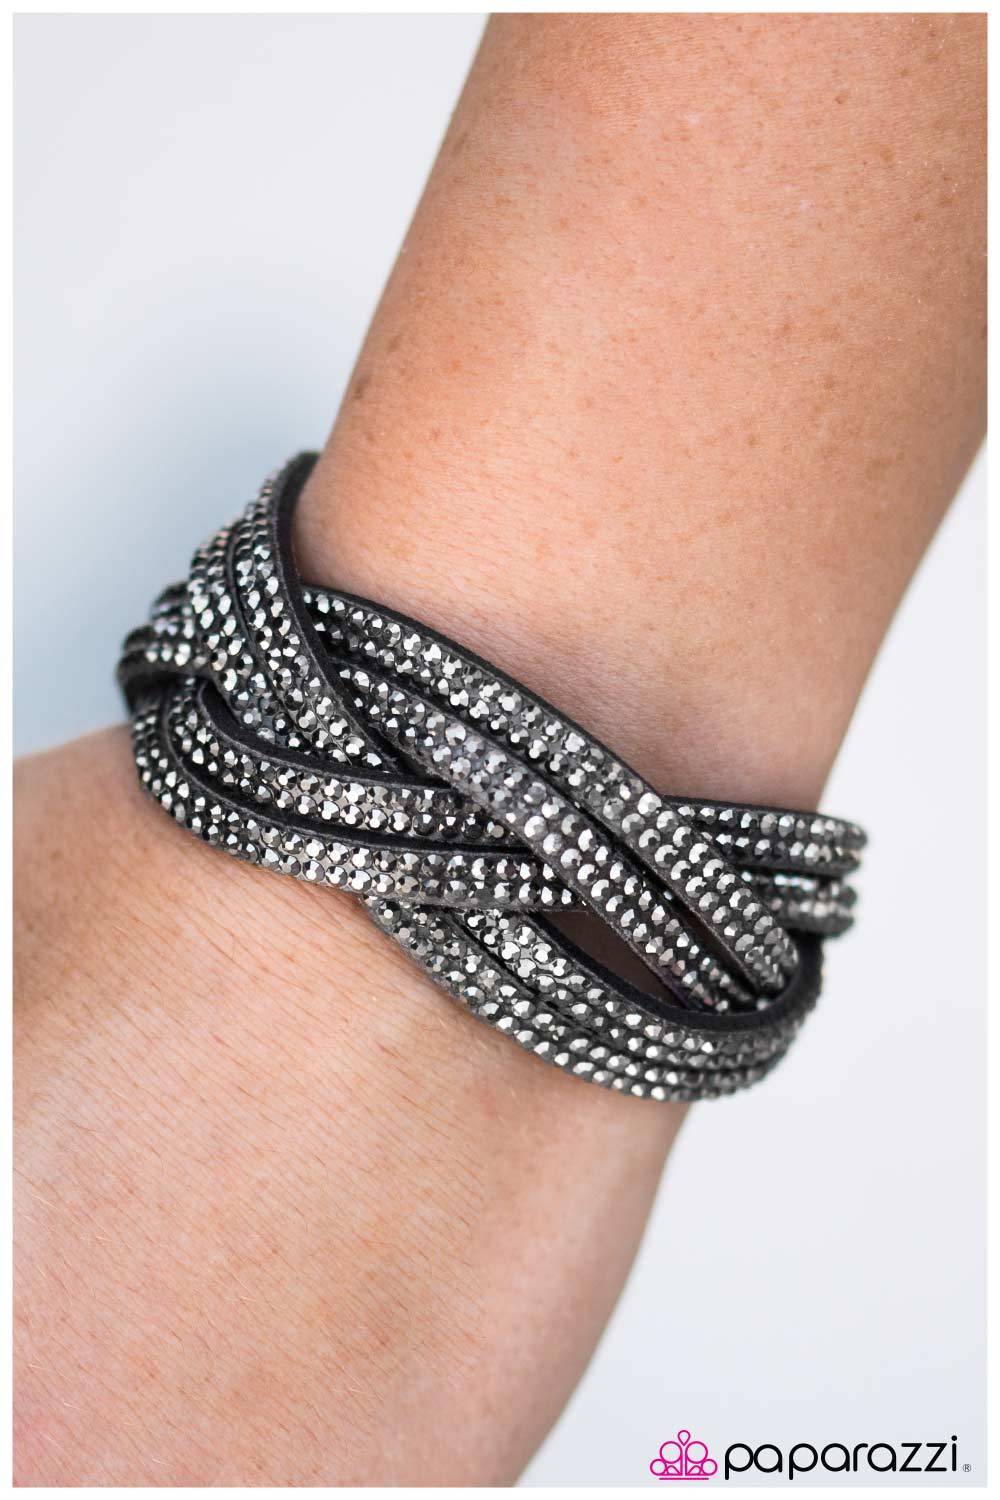 What a Hit! Black and Hematite Rhinestone Braided Wrap Snap Bracelet - Paparazzi Accessories-CarasShop.com - $5 Jewelry by Cara Jewels